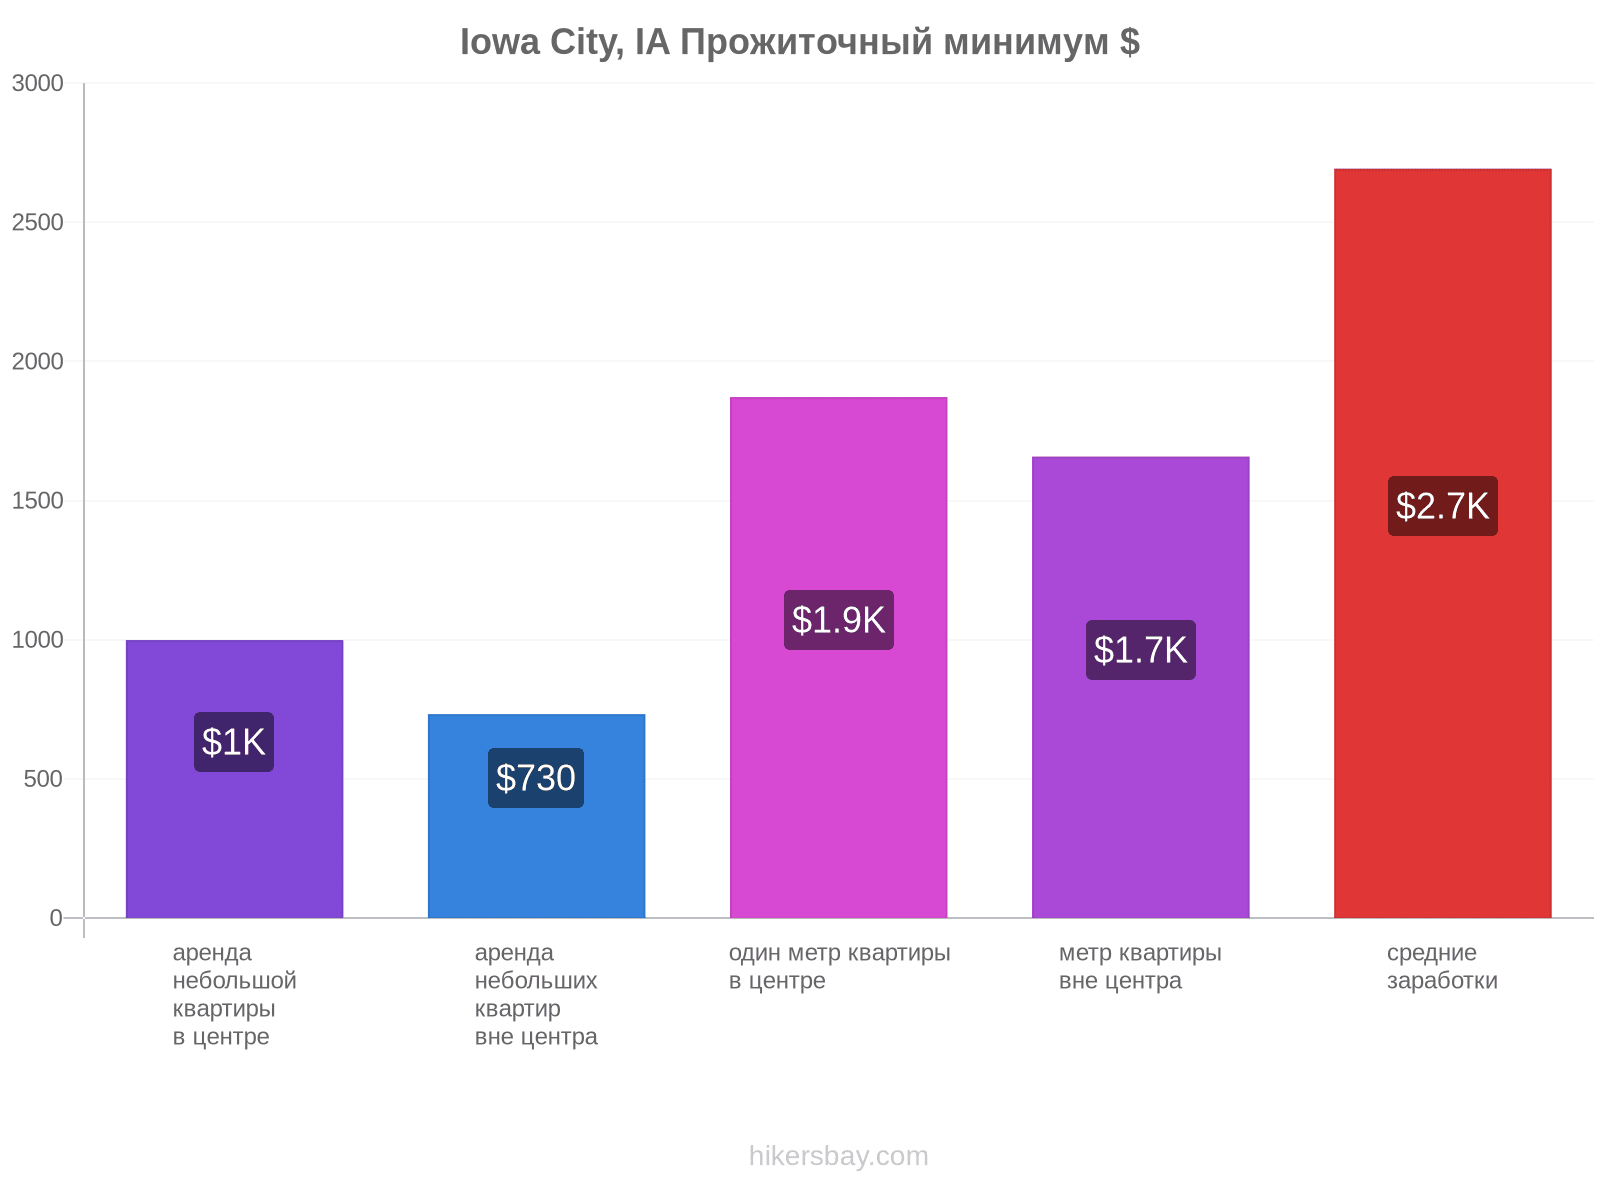 Iowa City, IA стоимость жизни hikersbay.com